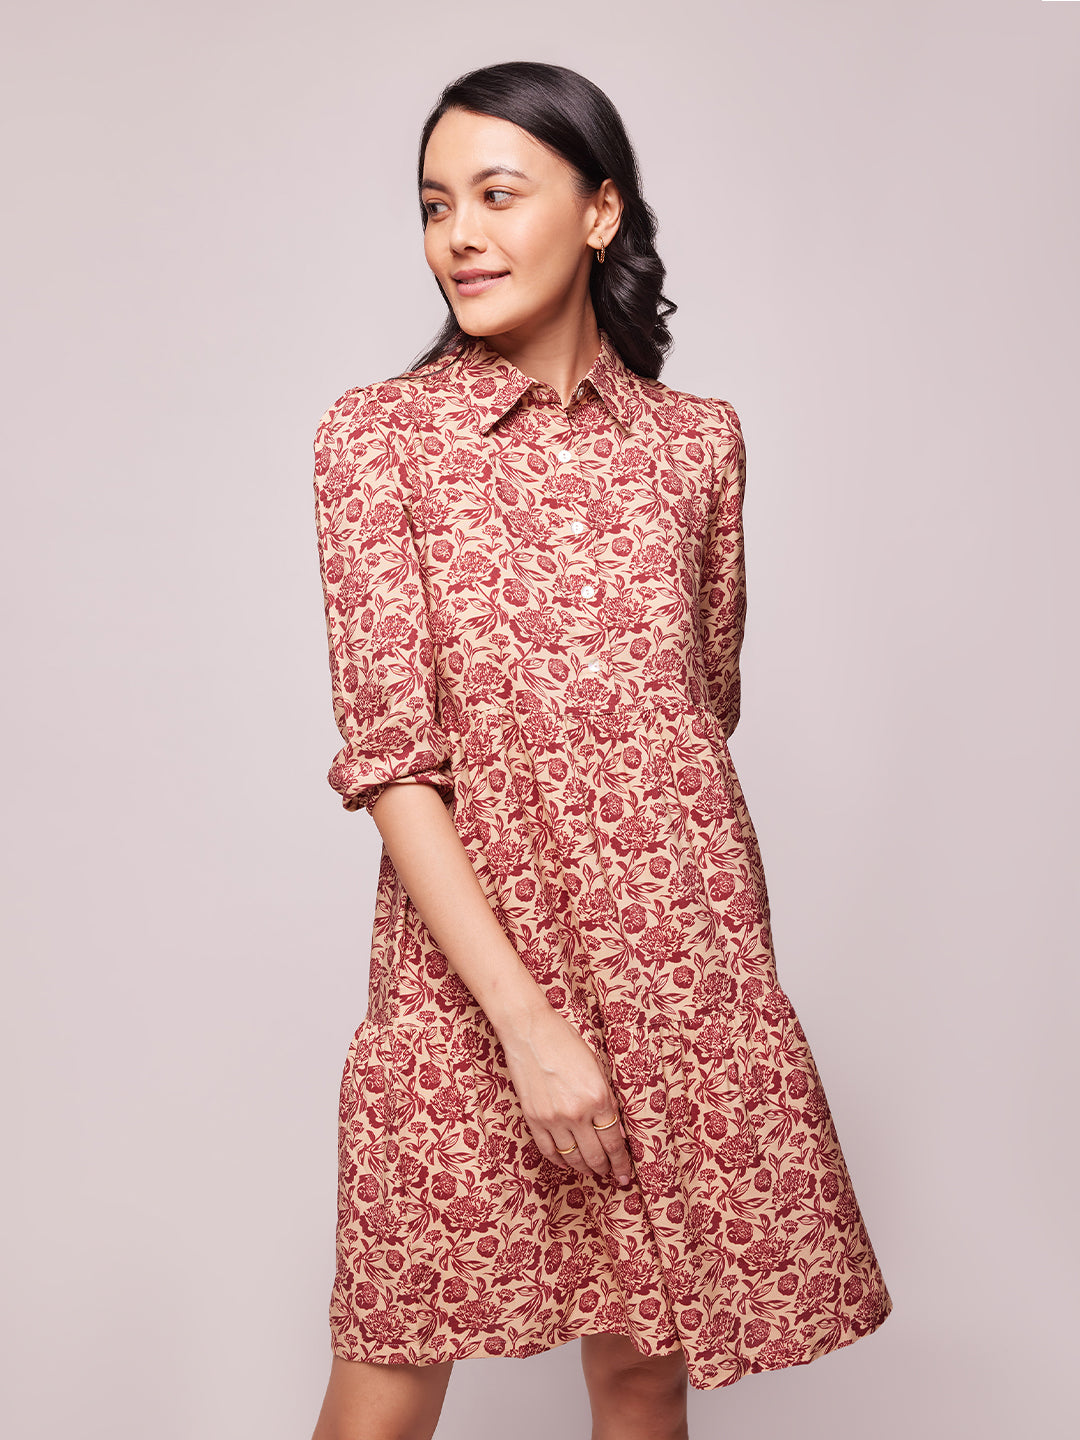 Bombay High Women's Vintage Beige Floral Print Short Length Tiered Dress